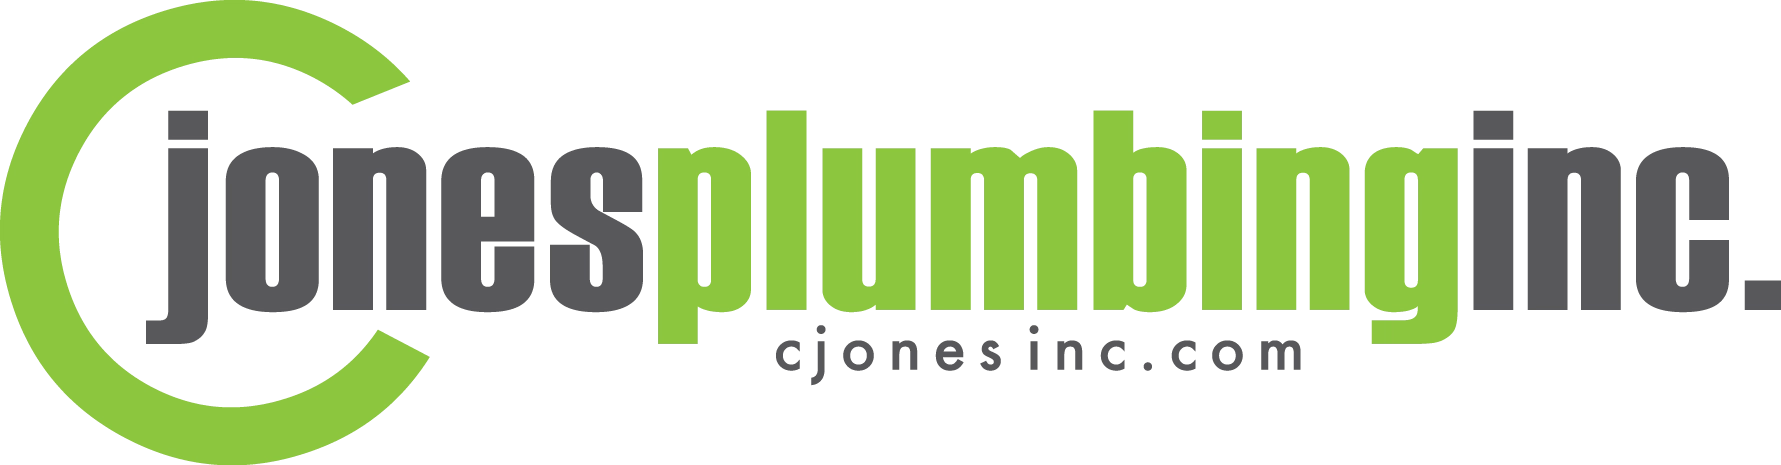 CJones Plumbing, Inc. Logo